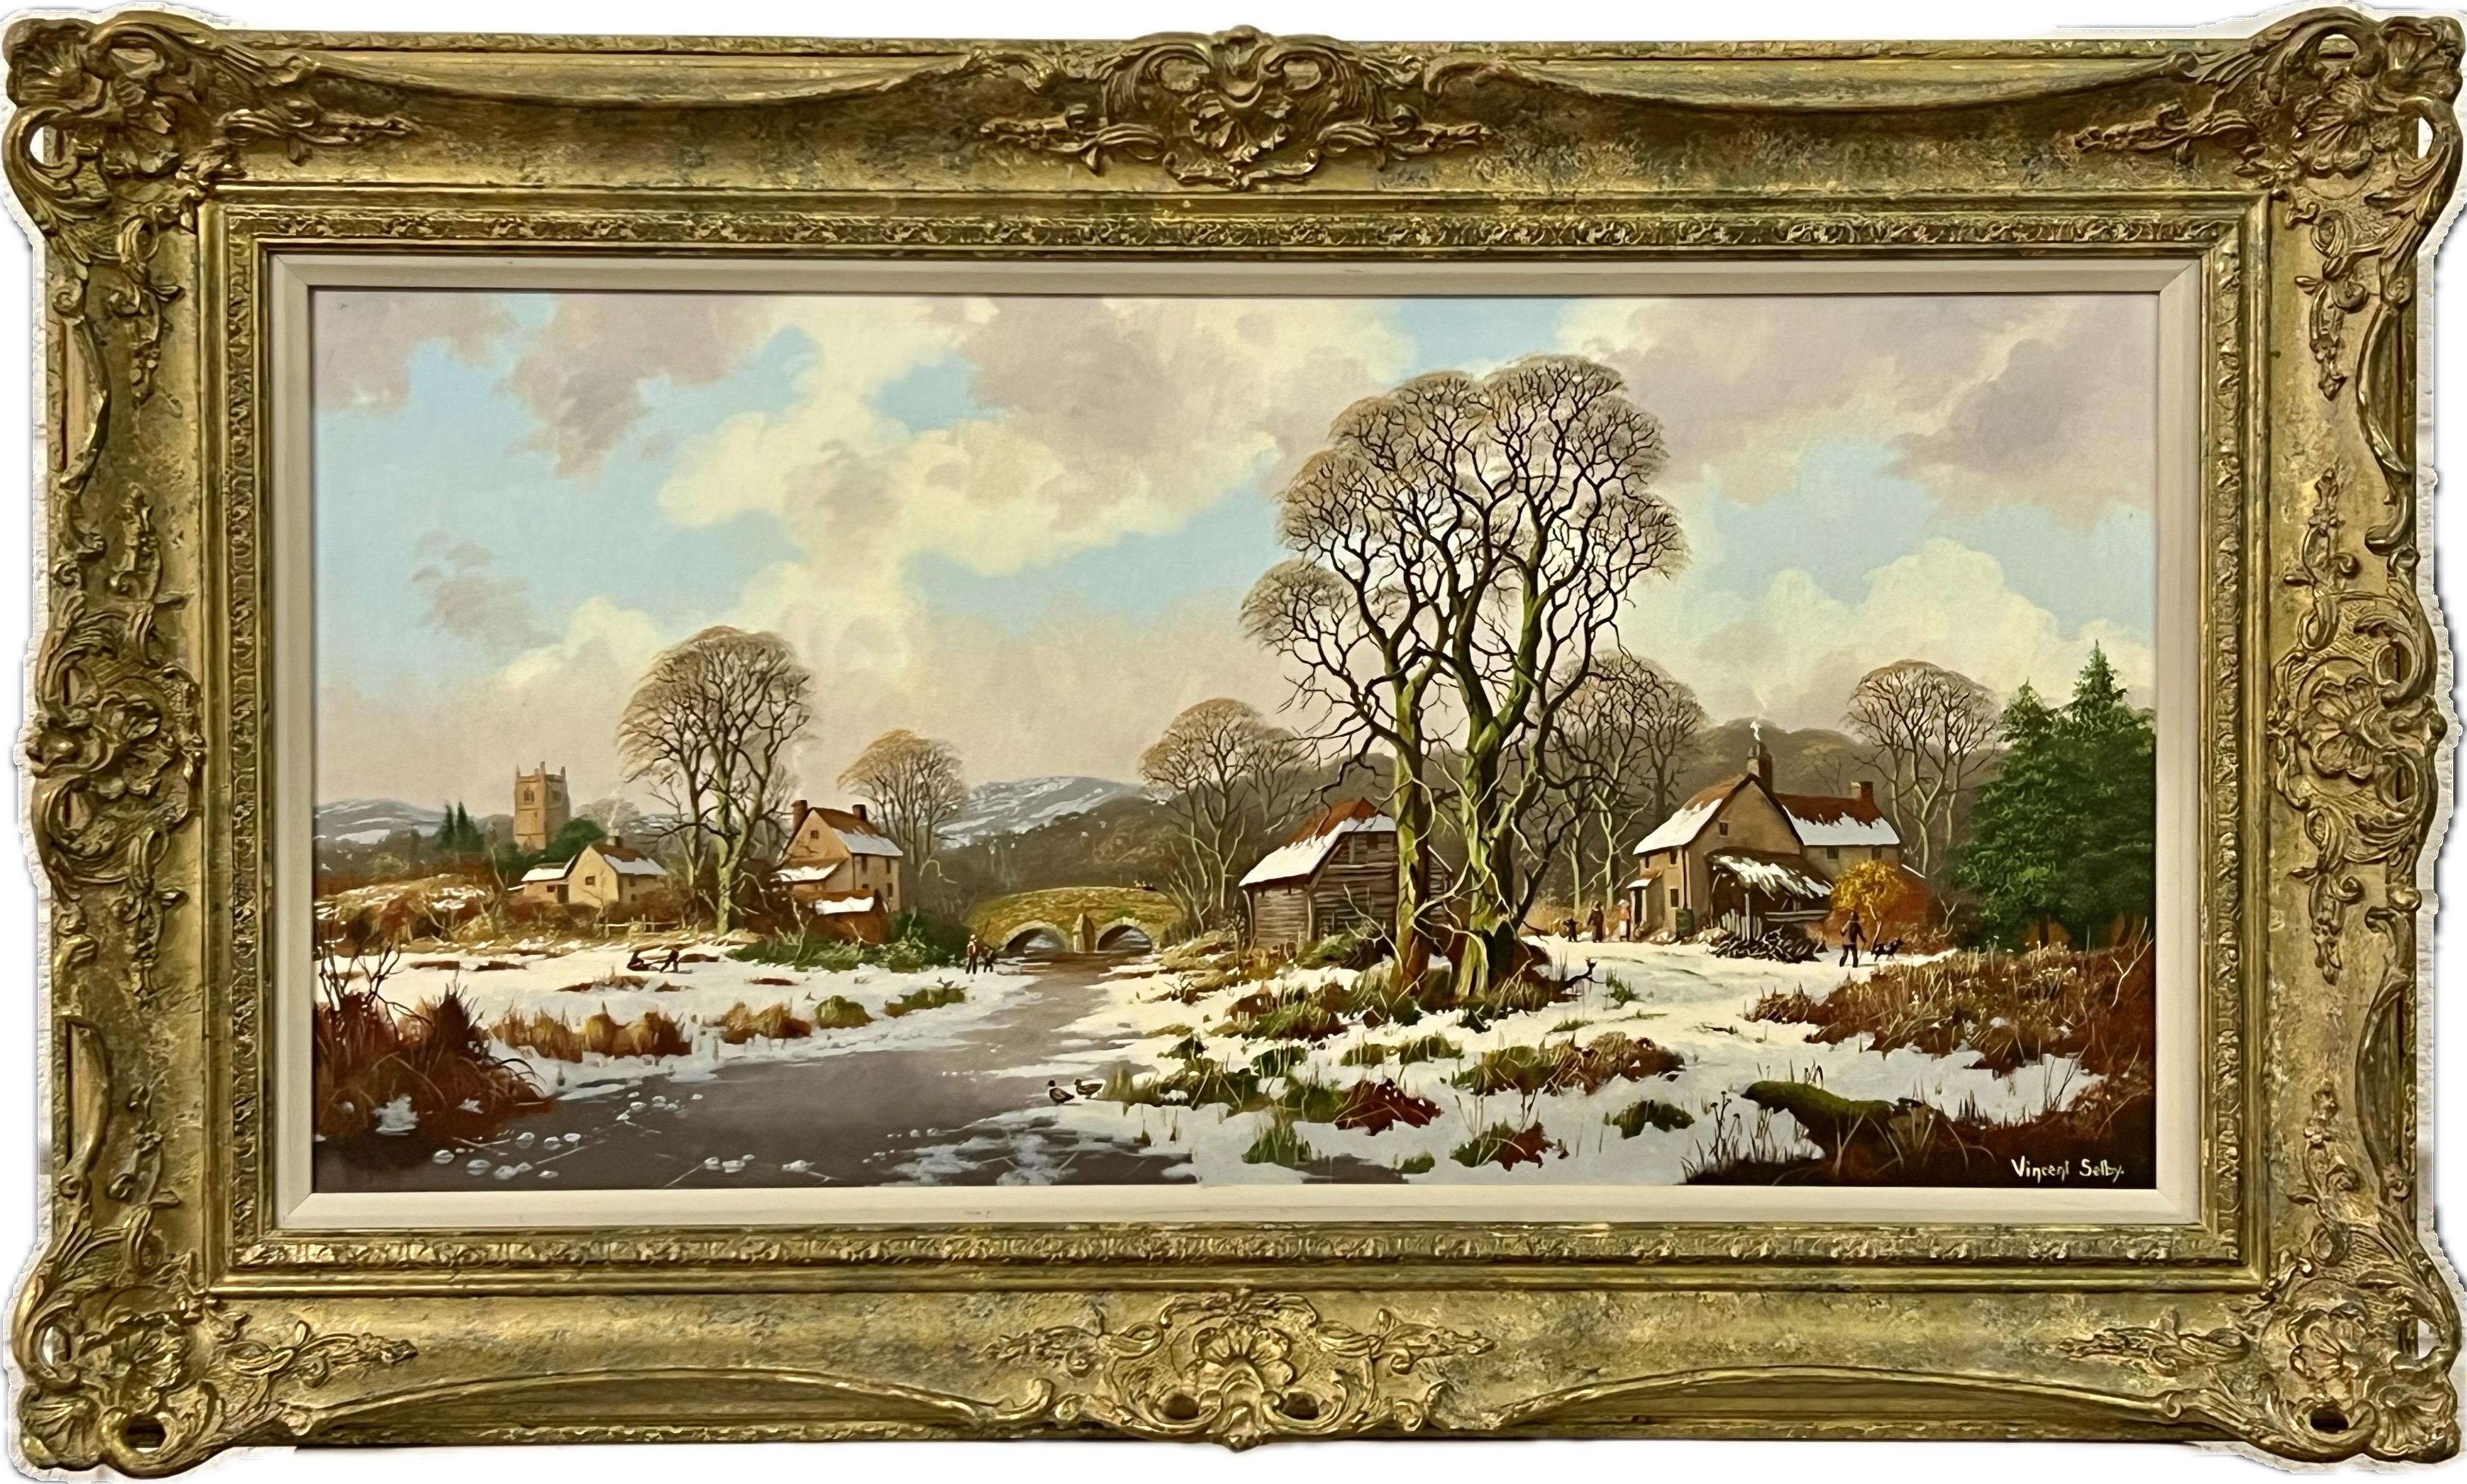 Vincent Selby Landscape Painting - Winter Village Landscape with Families & Children by 20th Century British Artist